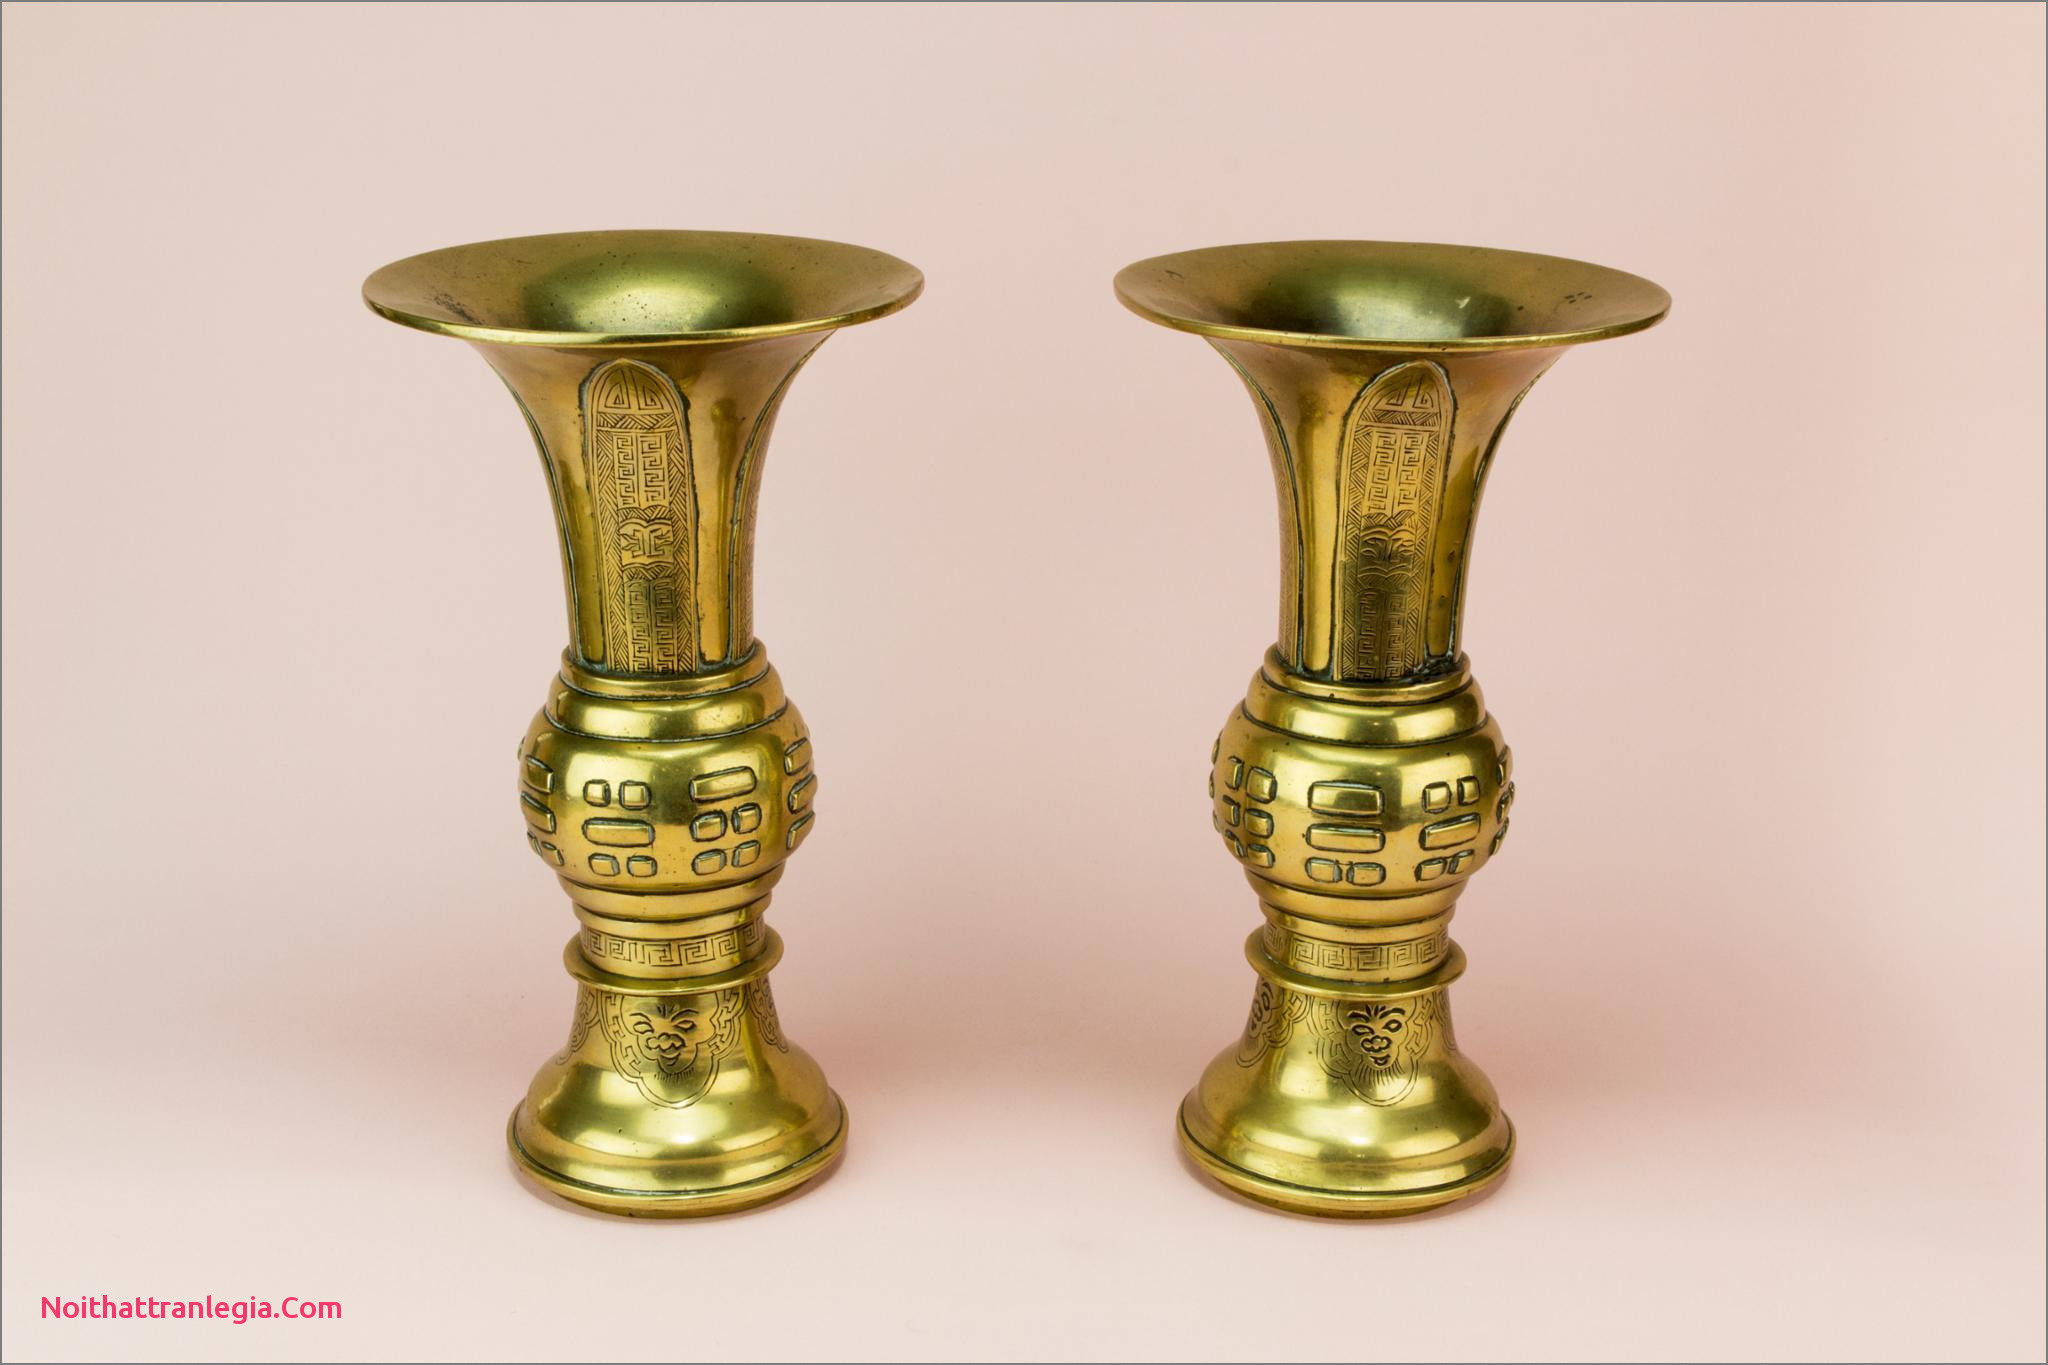 22 Wonderful oriental Vase Markings 2024 free download oriental vase markings of 20 chinese antique vase noithattranlegia vases design in 2 gu shaped brass vases chinese 19th century